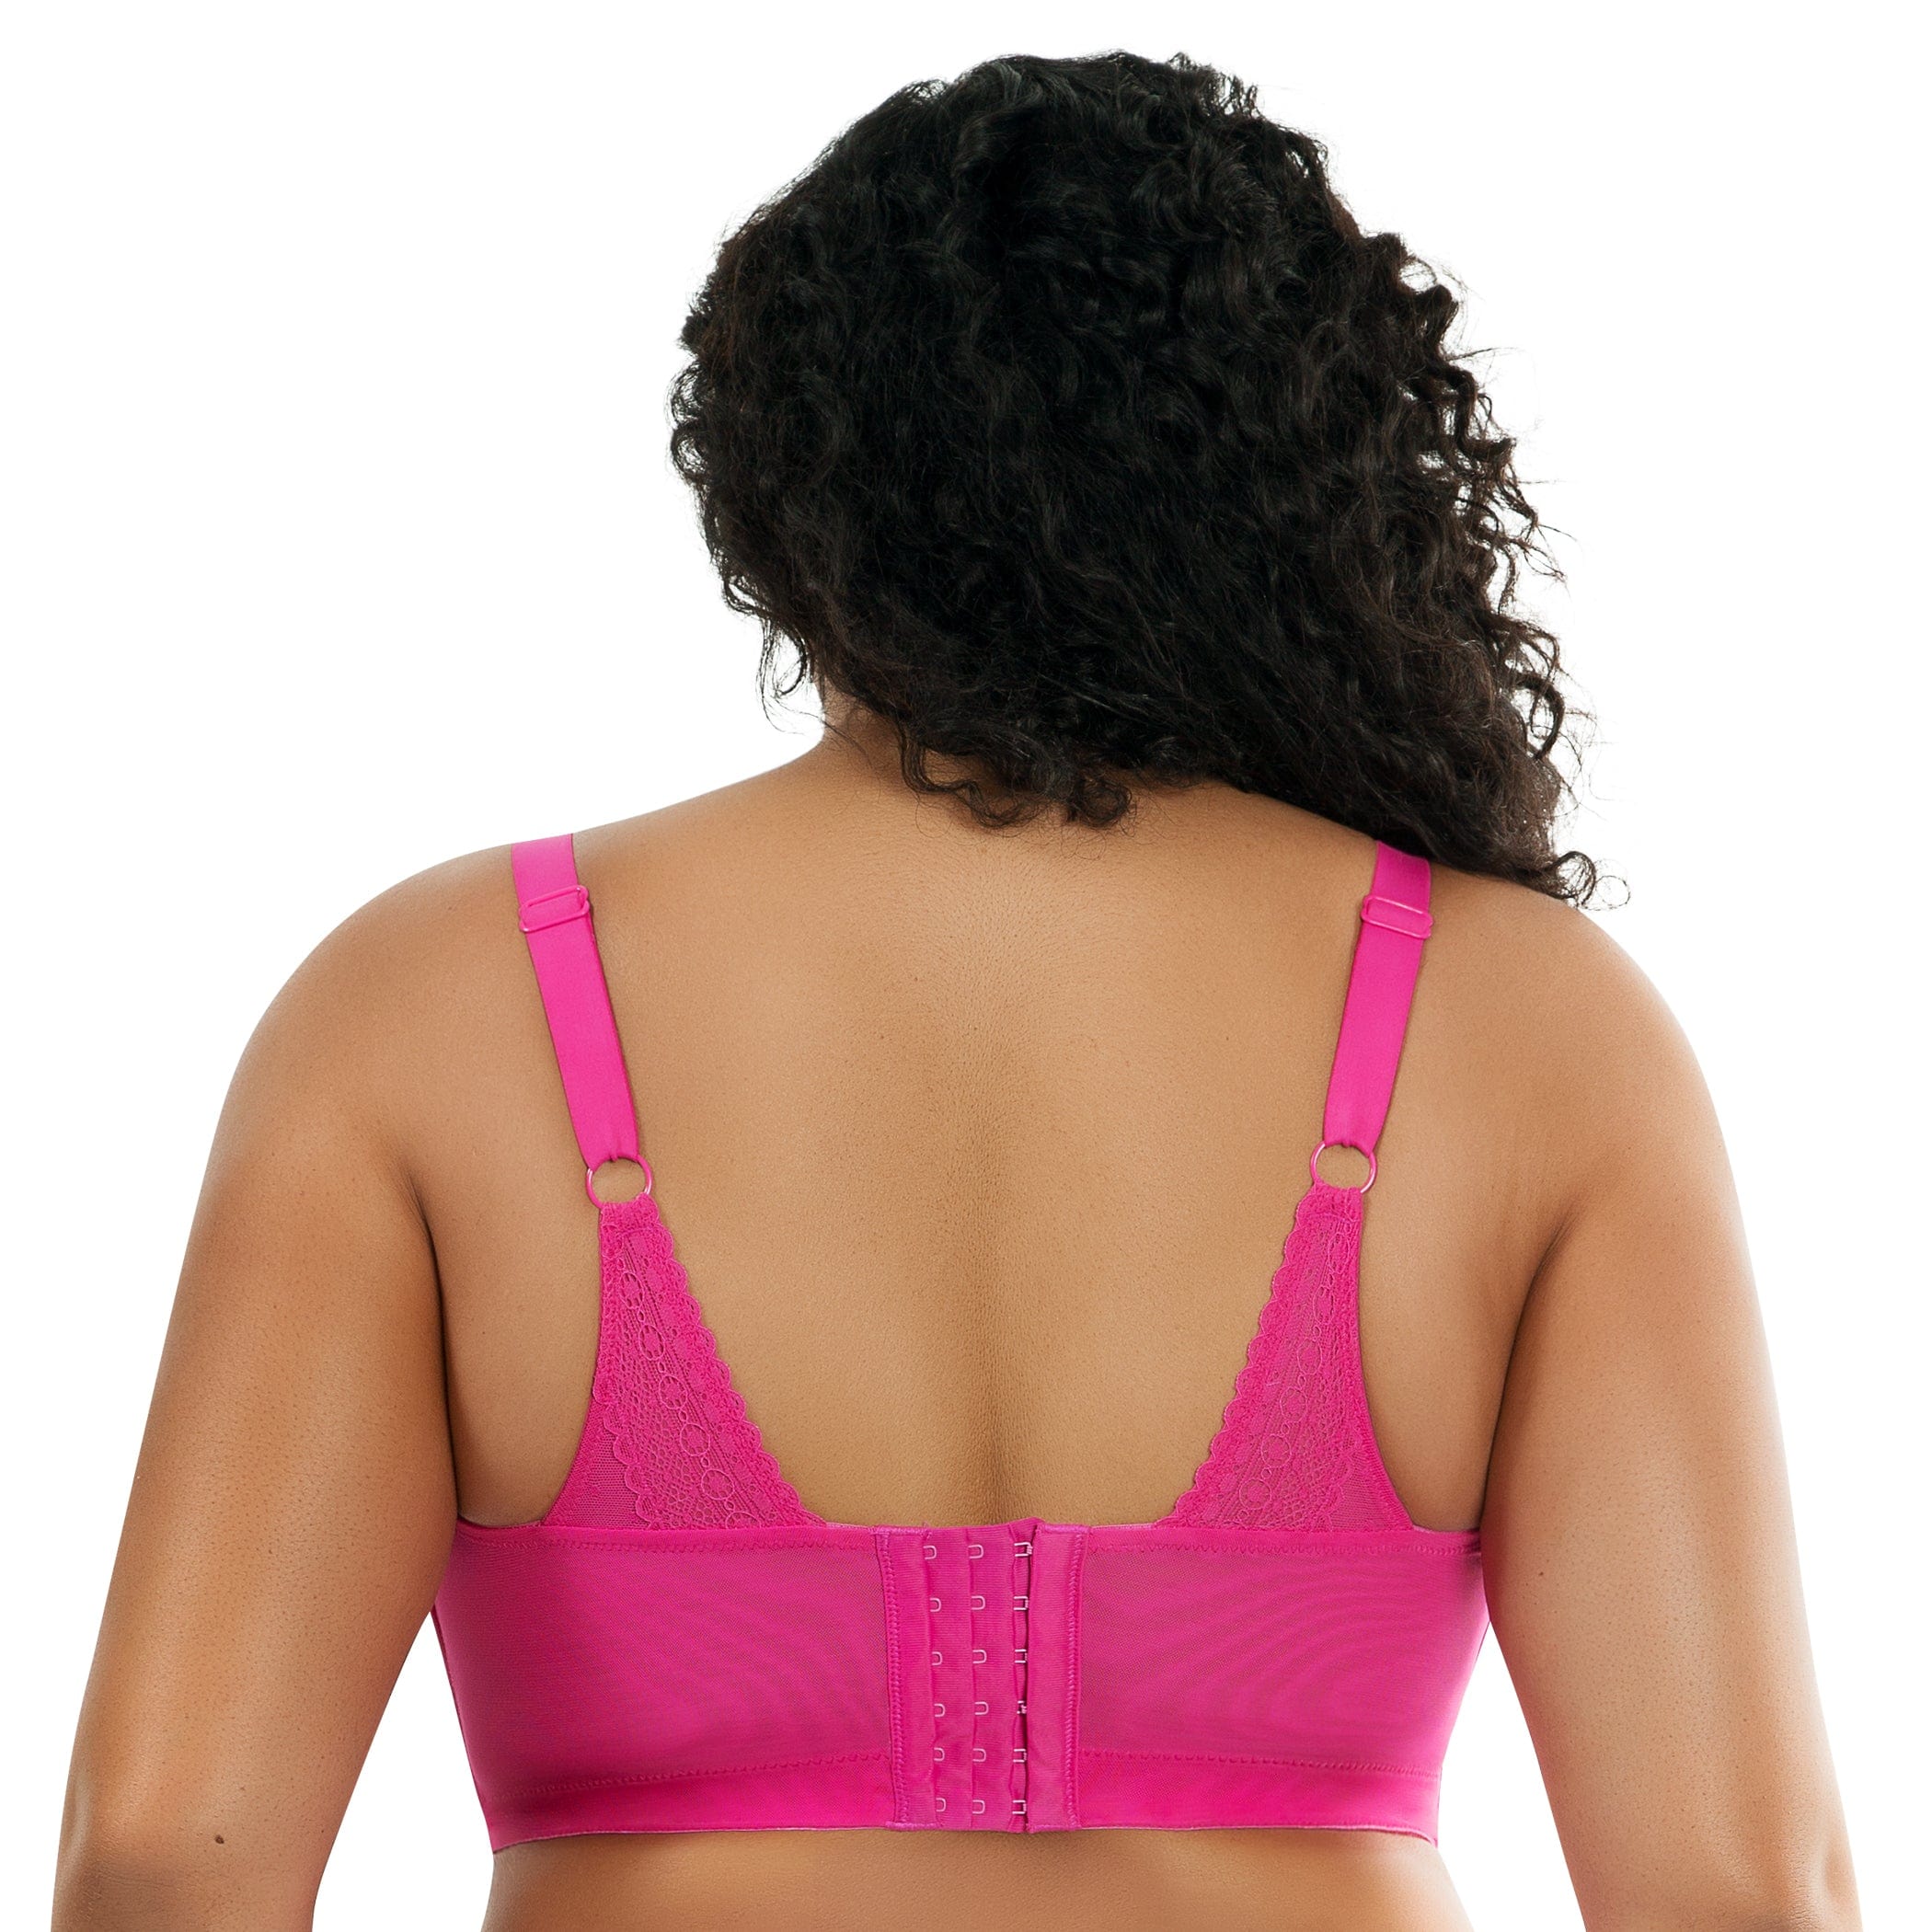 Parfait Women's Mia Dot Wire-free Bralette Bright Pink - 32c : Target